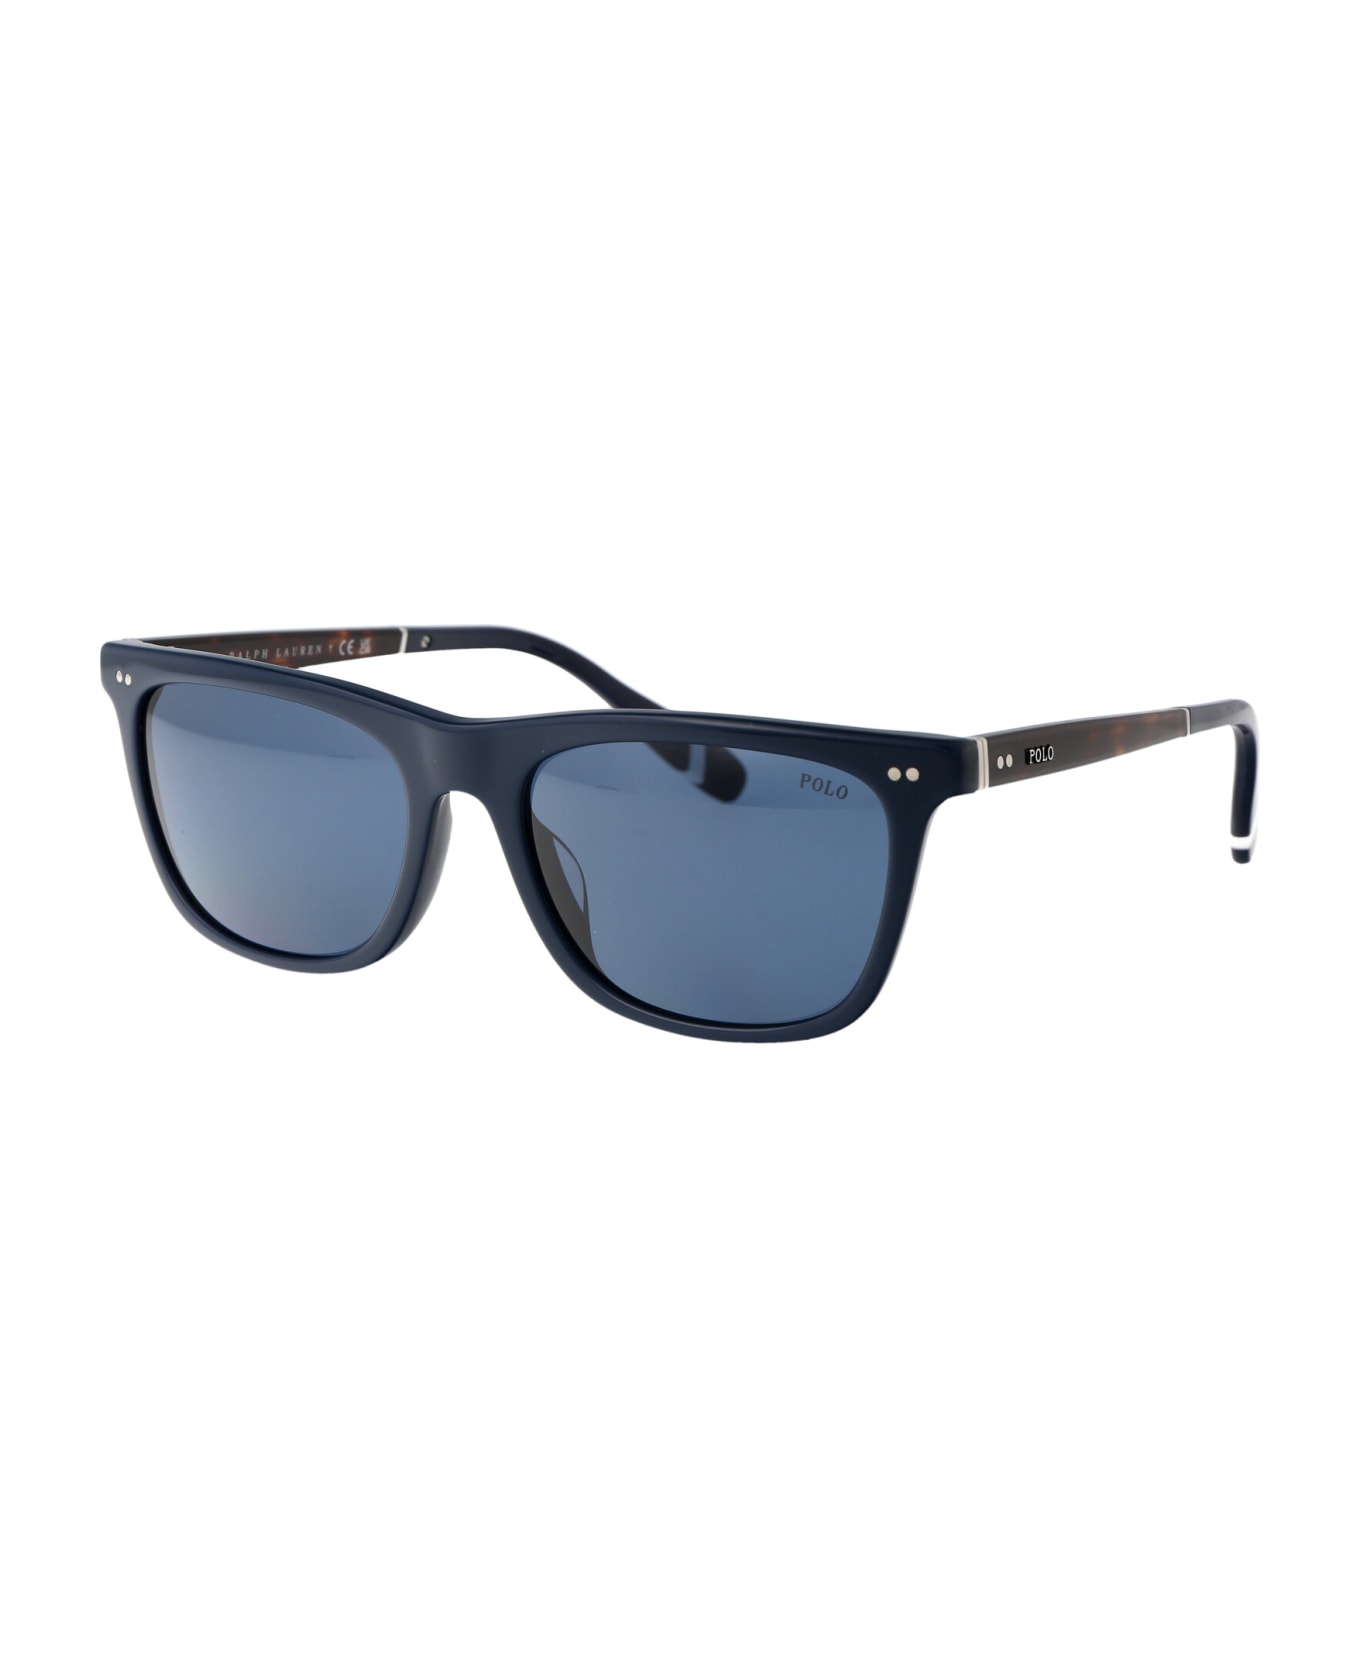 Polo Ralph Lauren 0ph4205u Sunglasses - 546580 Shiny Navy Blue